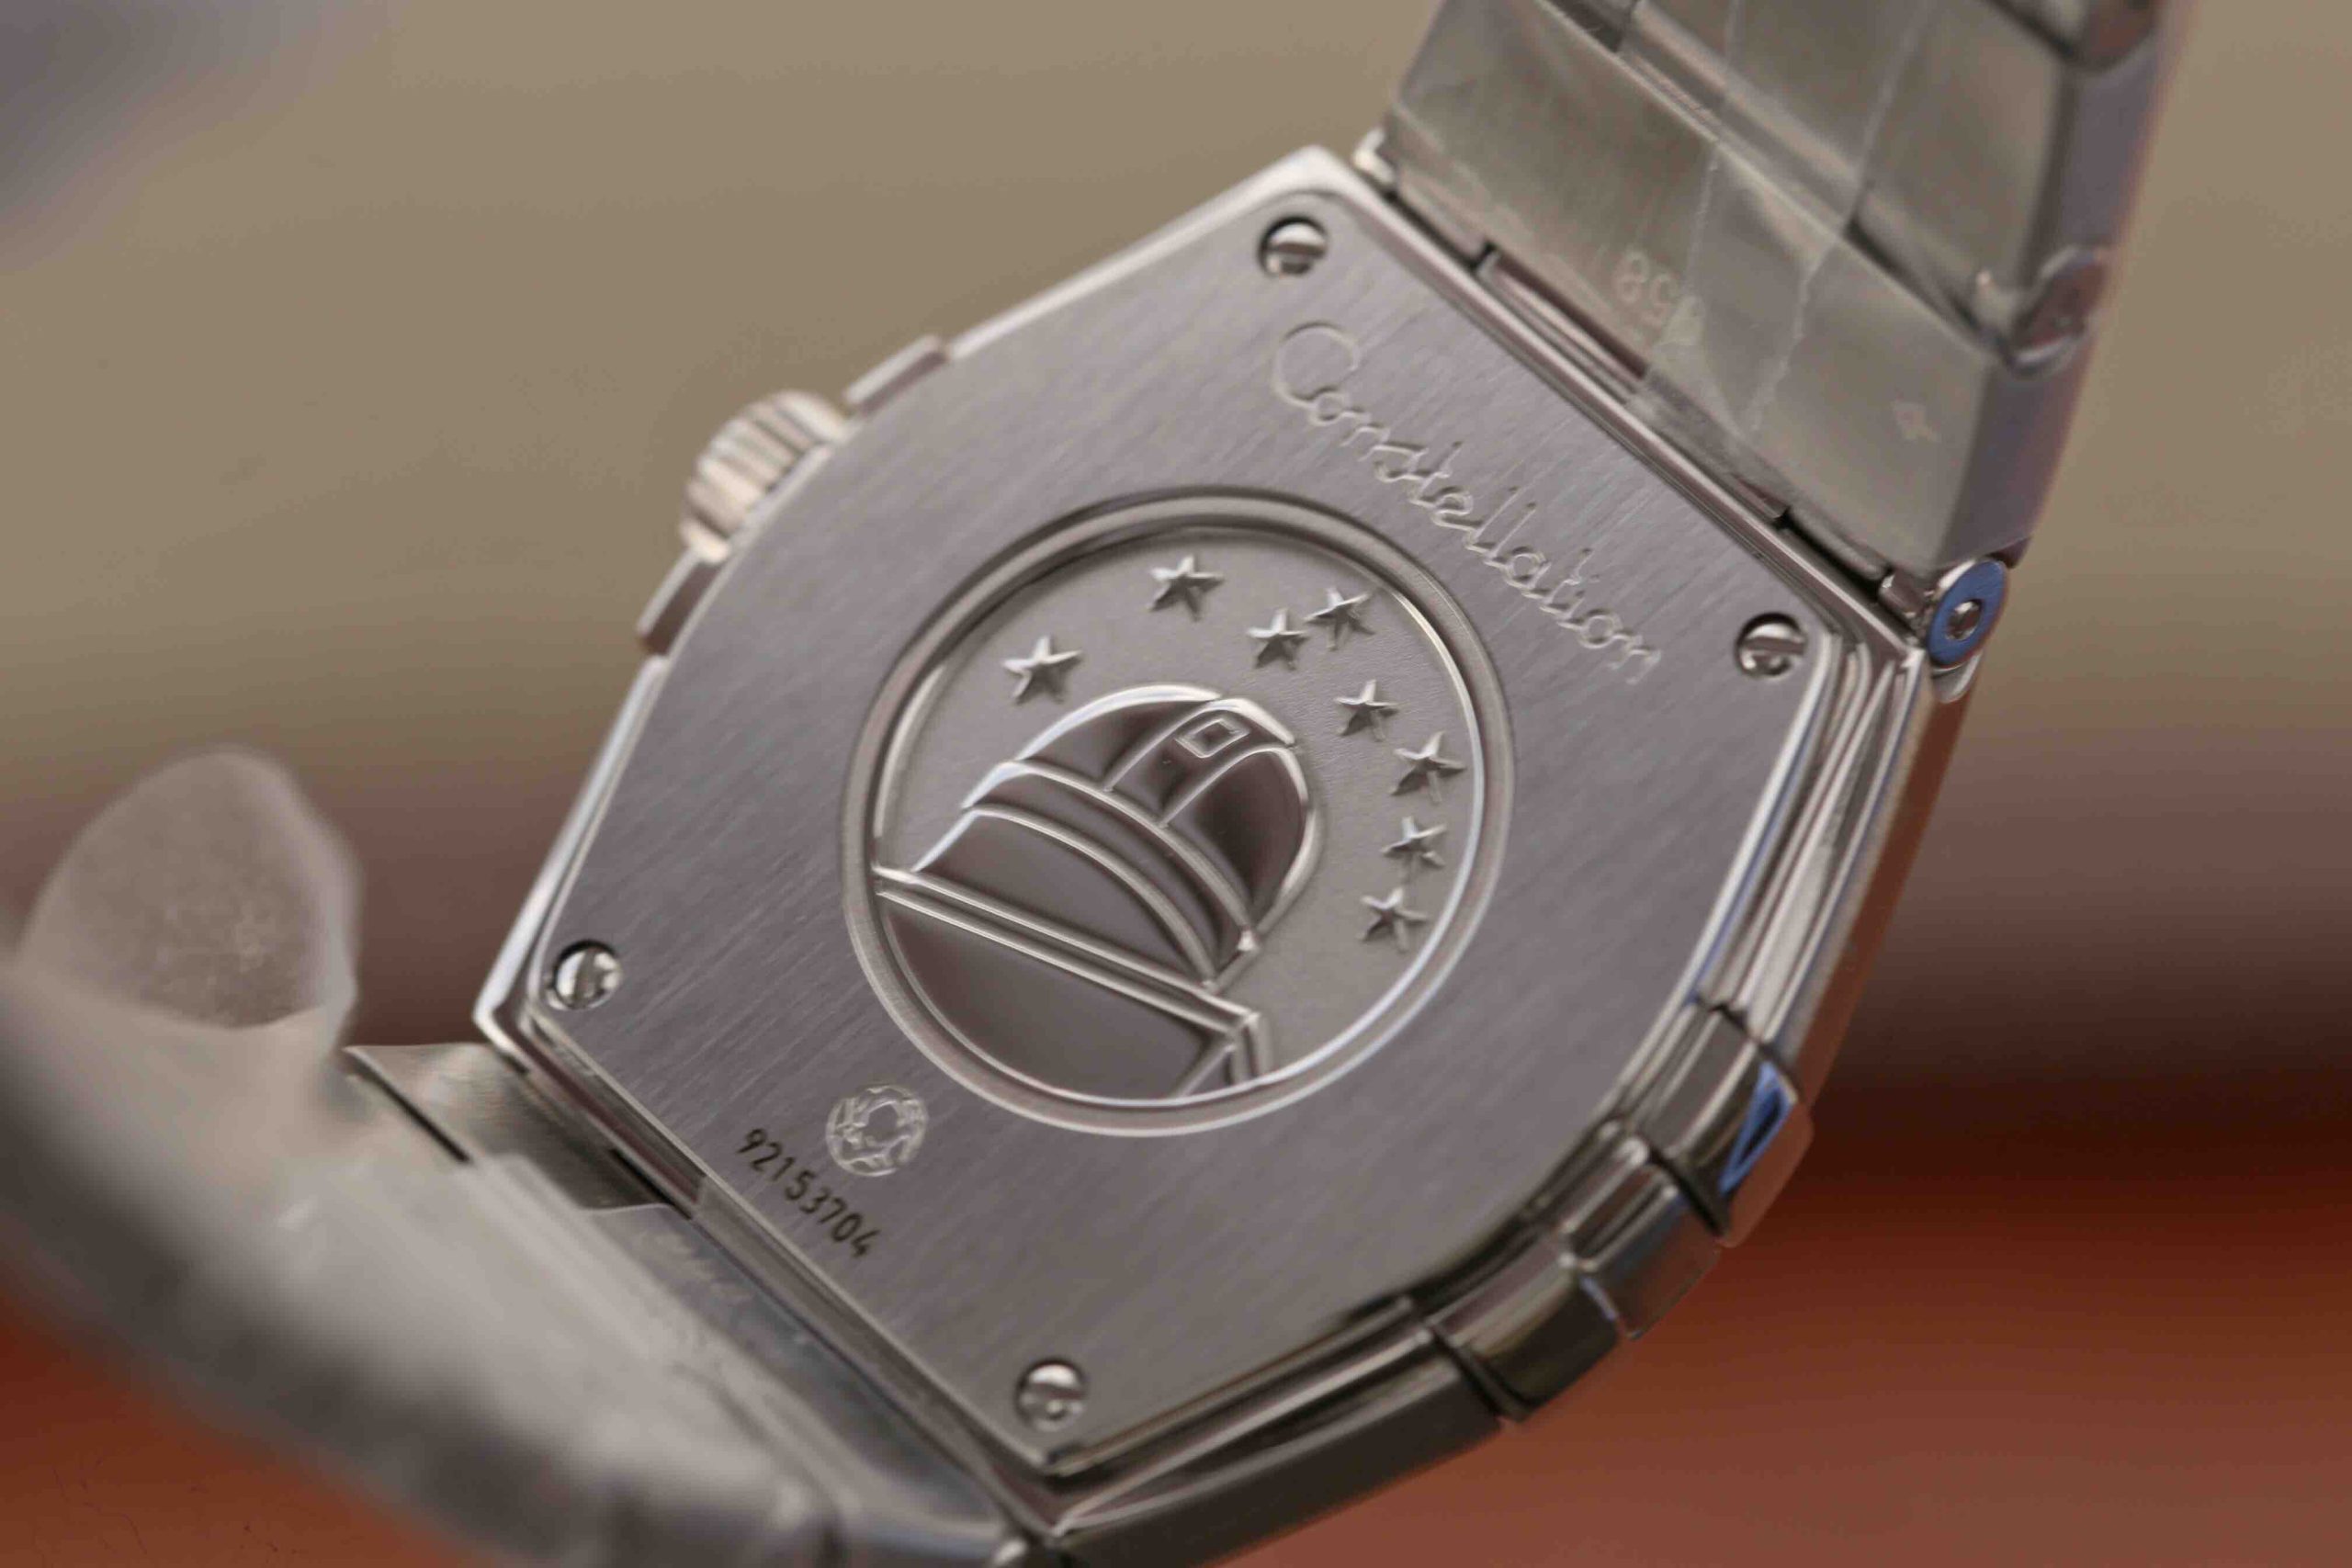 2023051403394275 scaled - 歐米茄星座繫列 高仿手錶帶上 v6歐米茄星座繫列27毫米石英￥3380